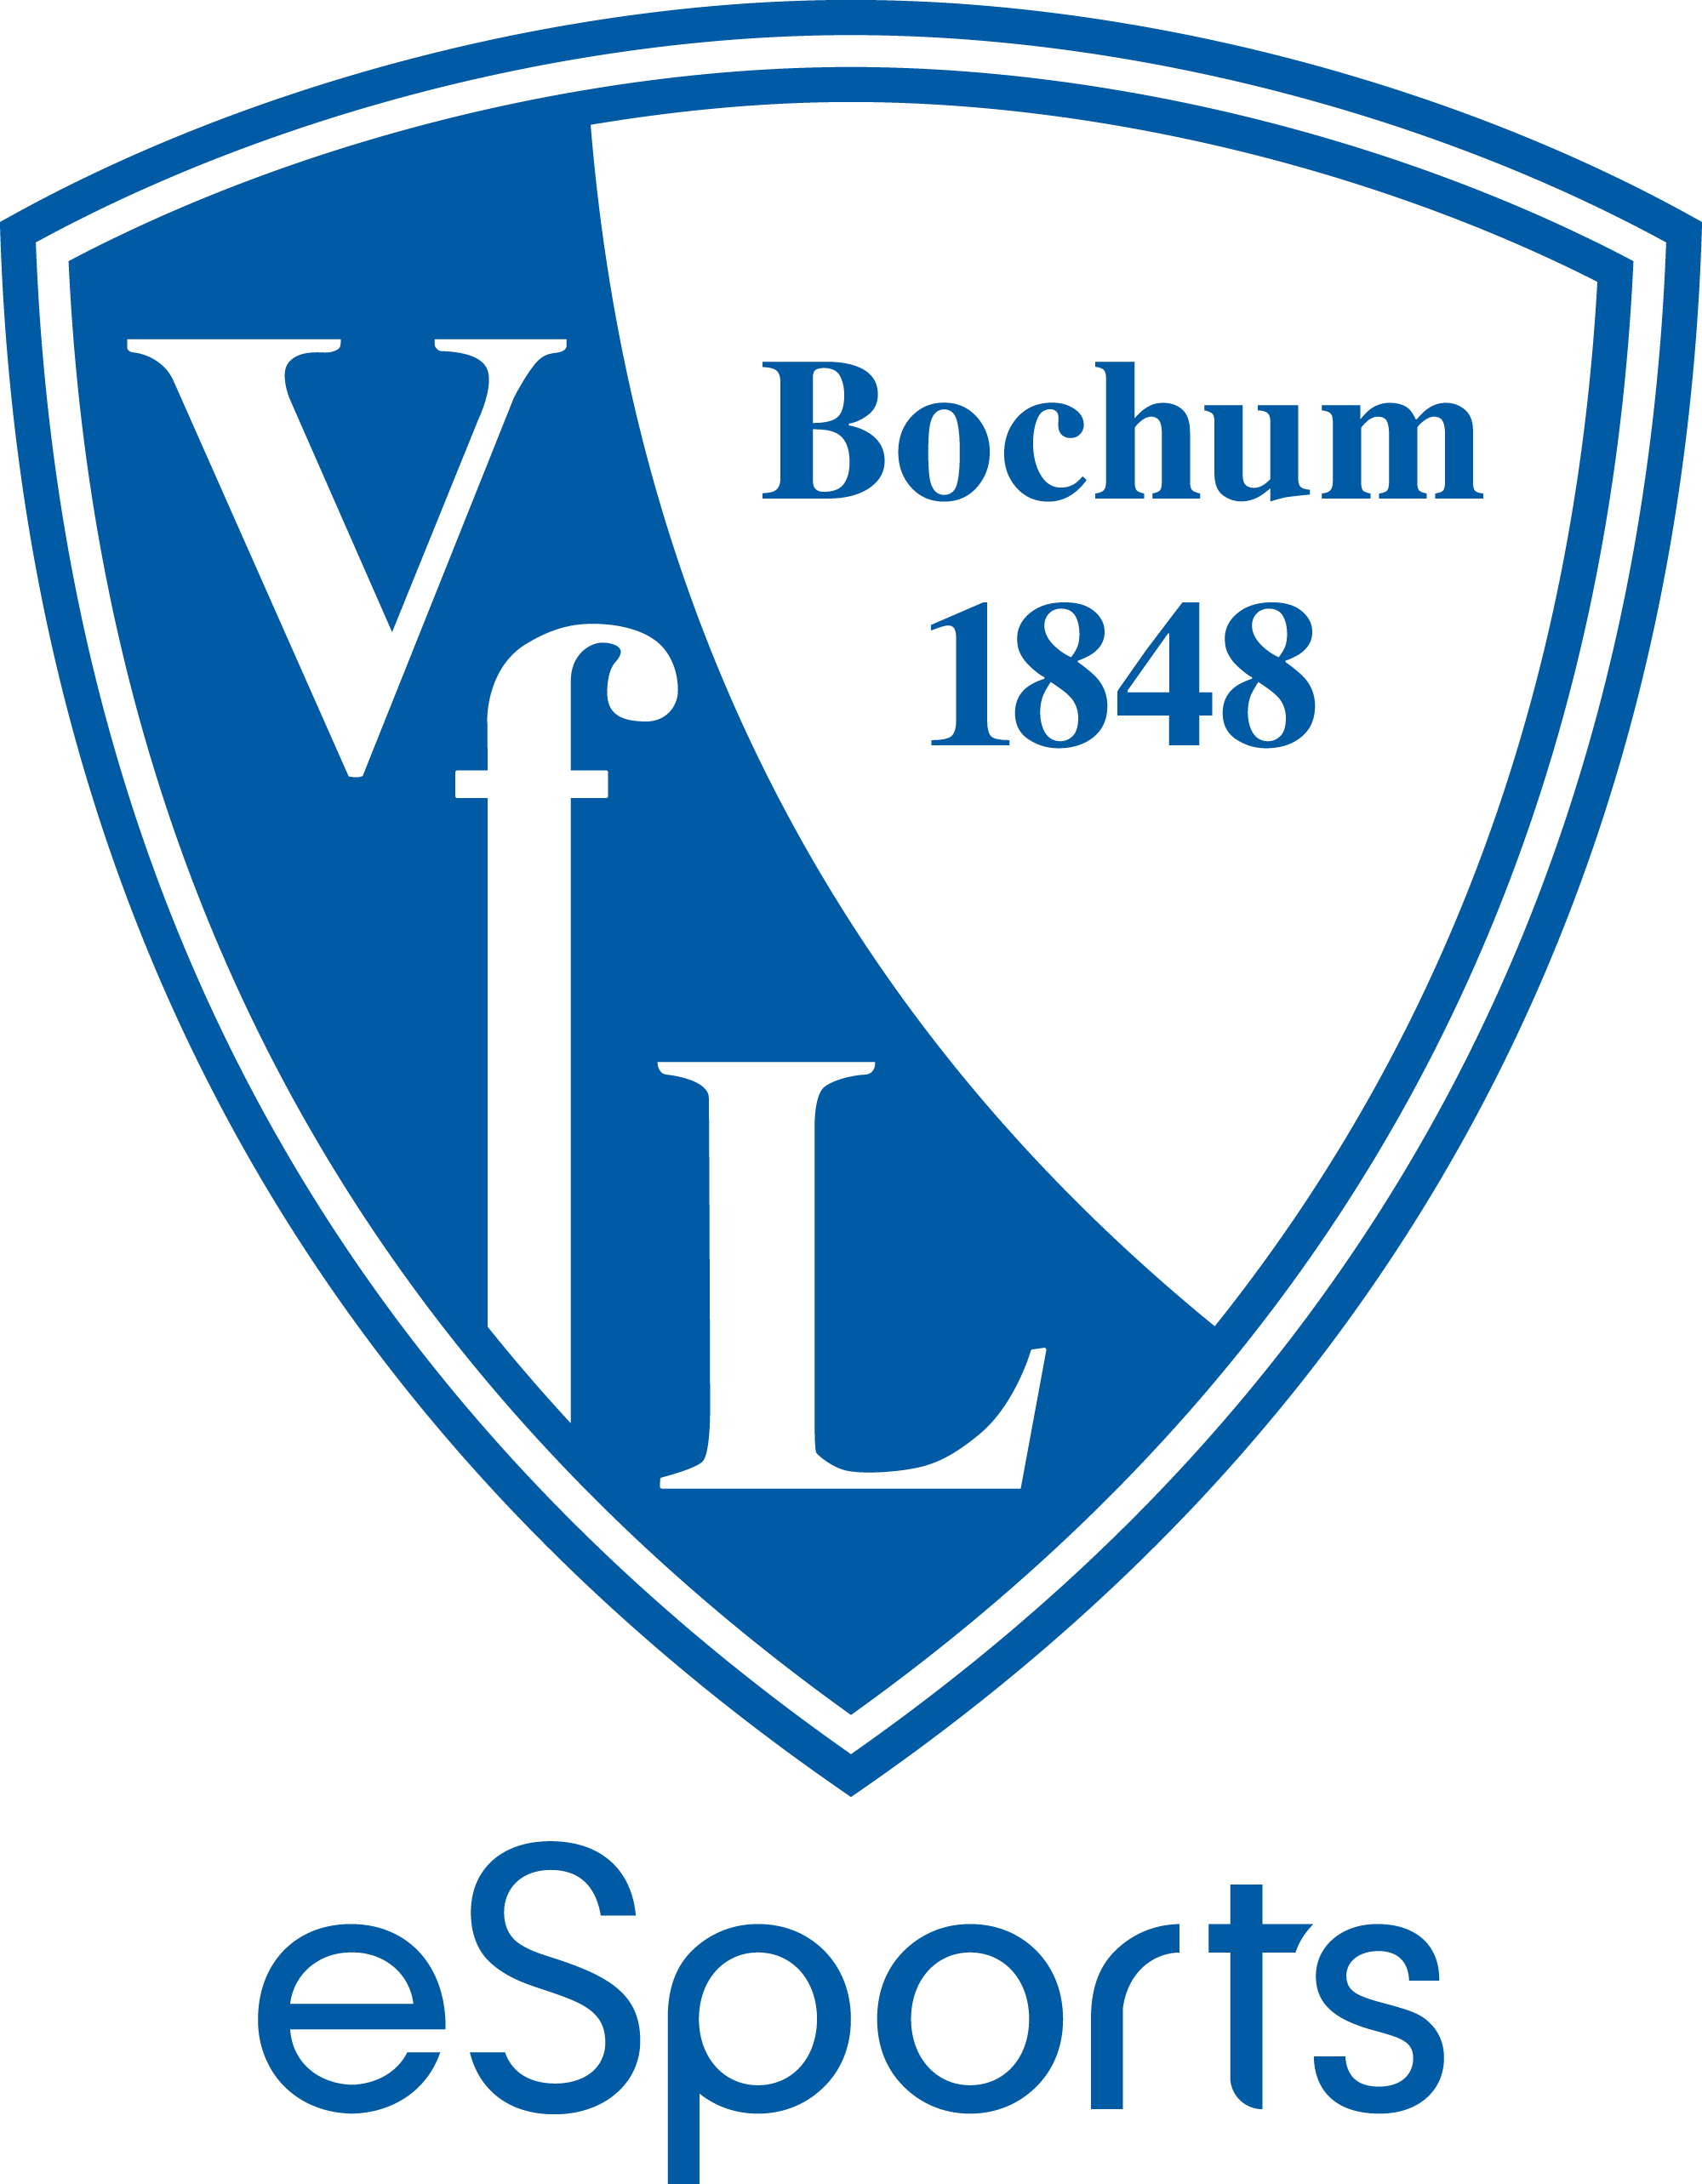 VfL Bochum 1848 eSports